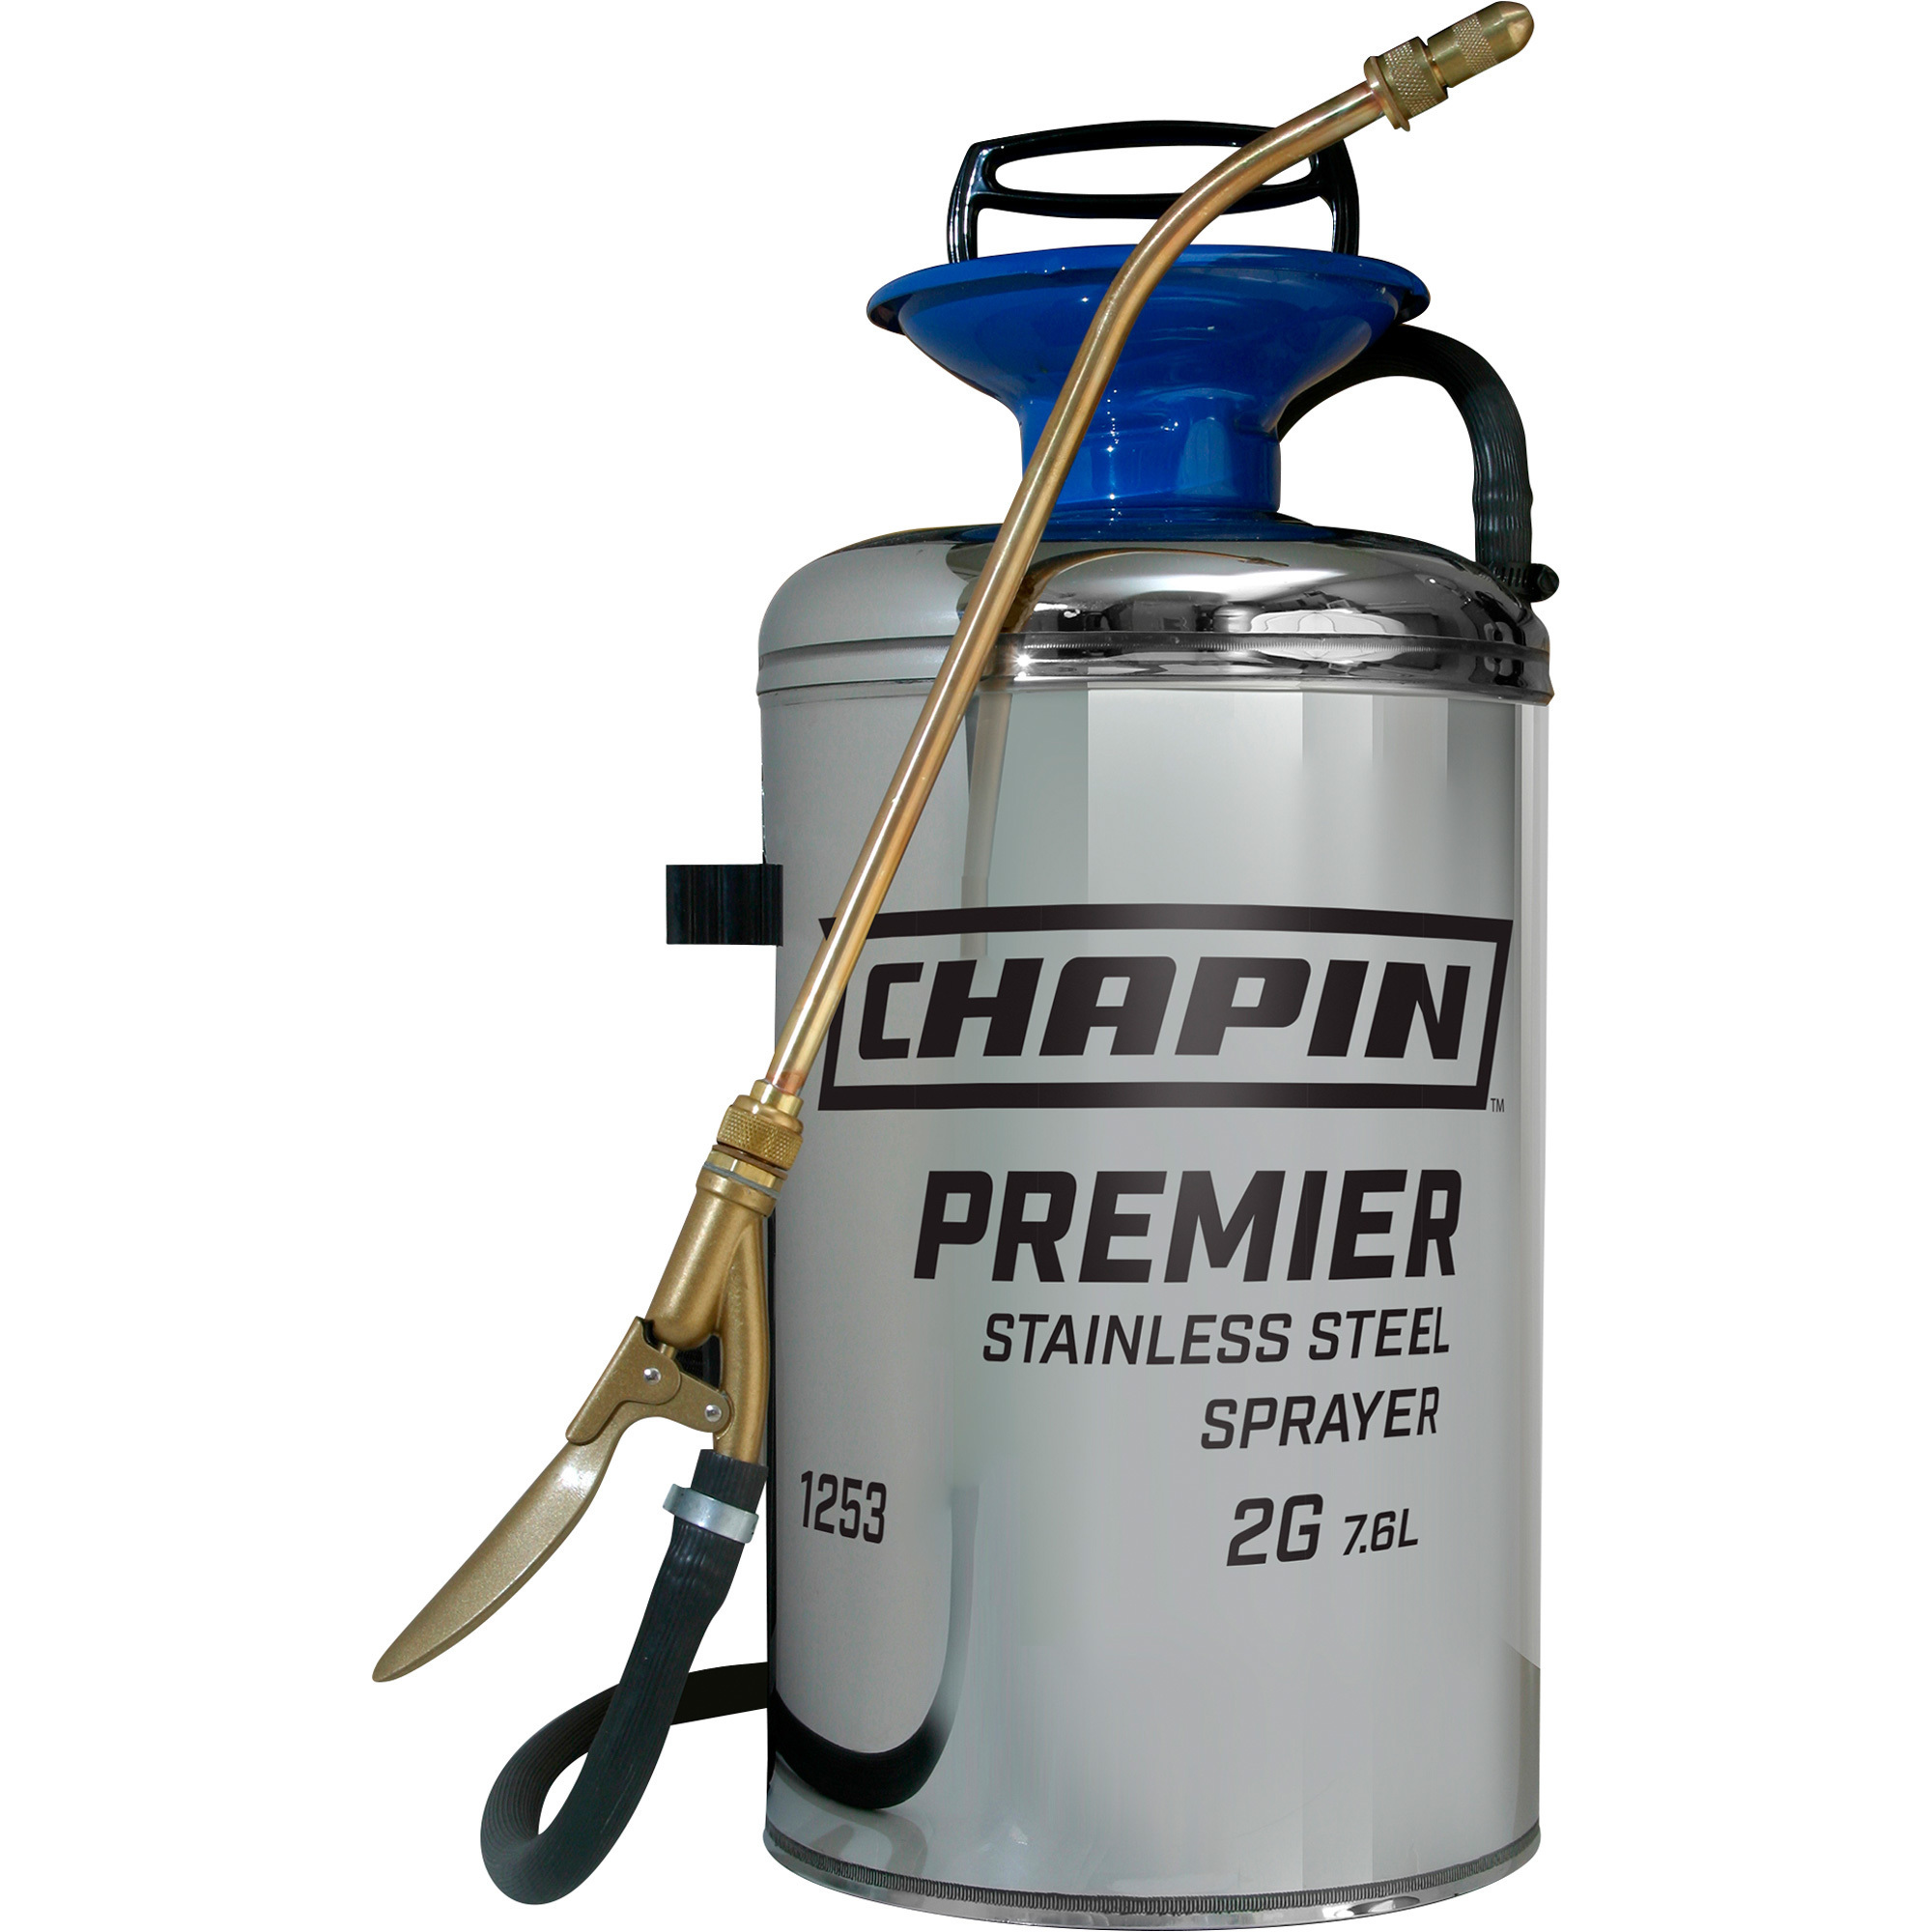 Chapin Stainless Steel Sprayer, 2 Gallon, Model 1253